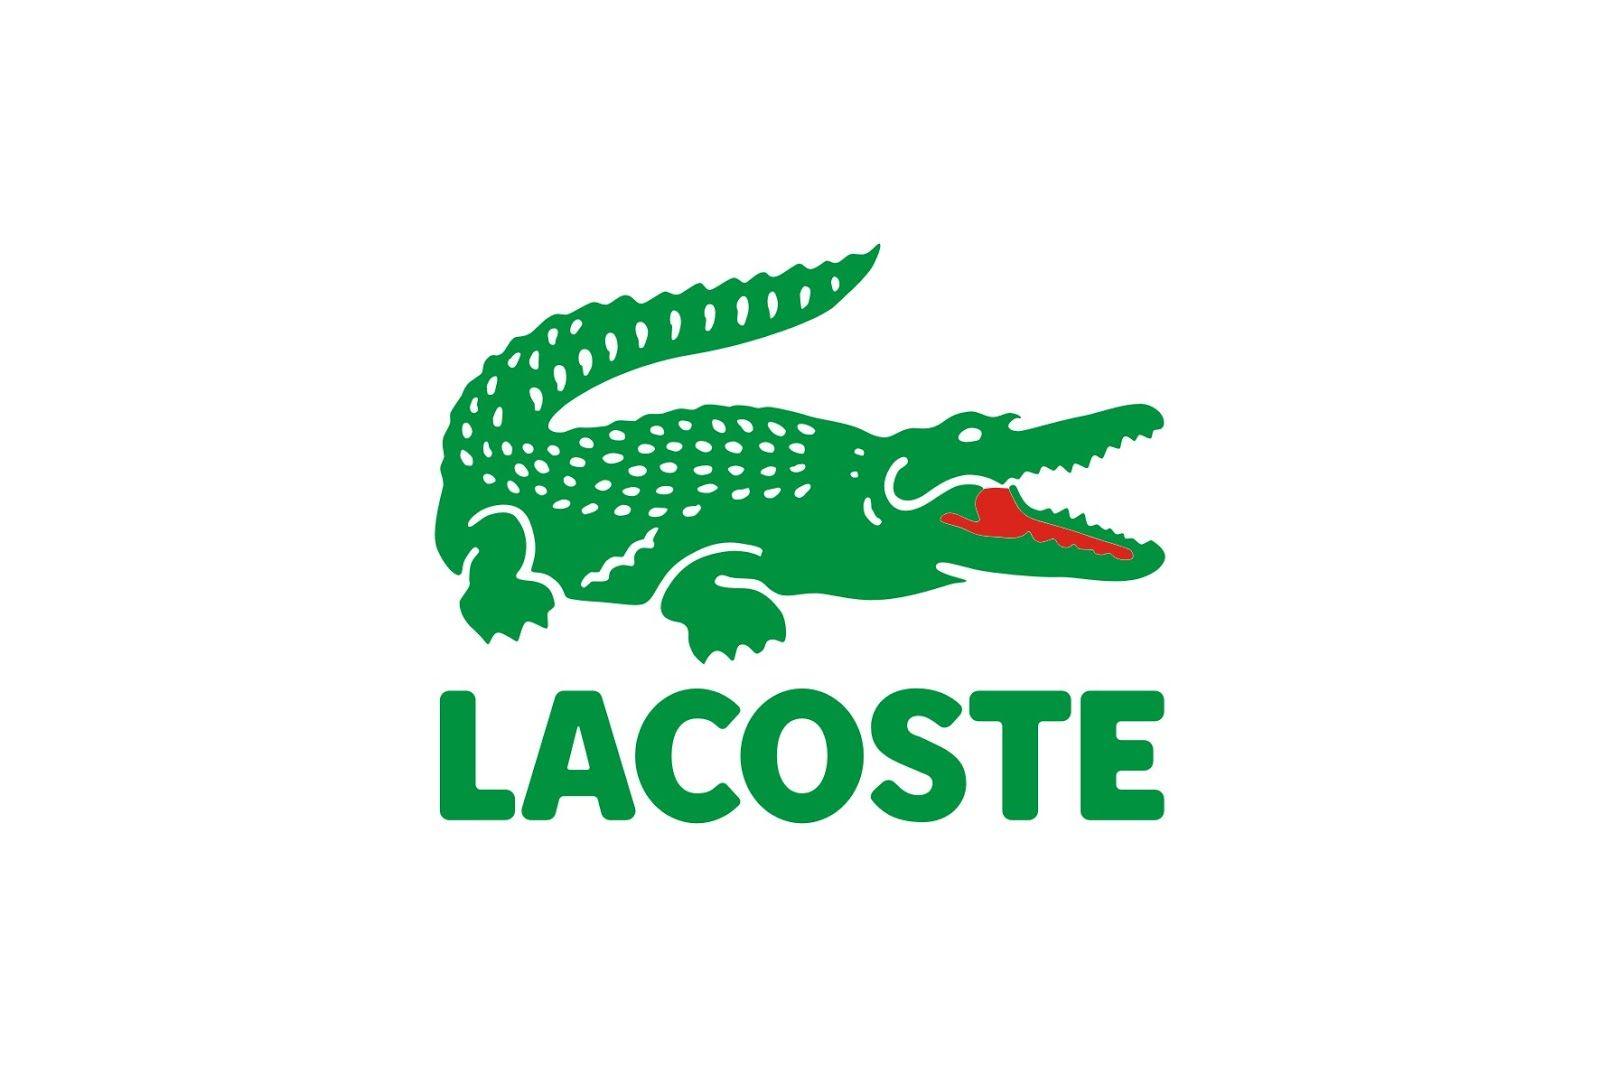 Lacoste Original Logo - Lacoste Logos